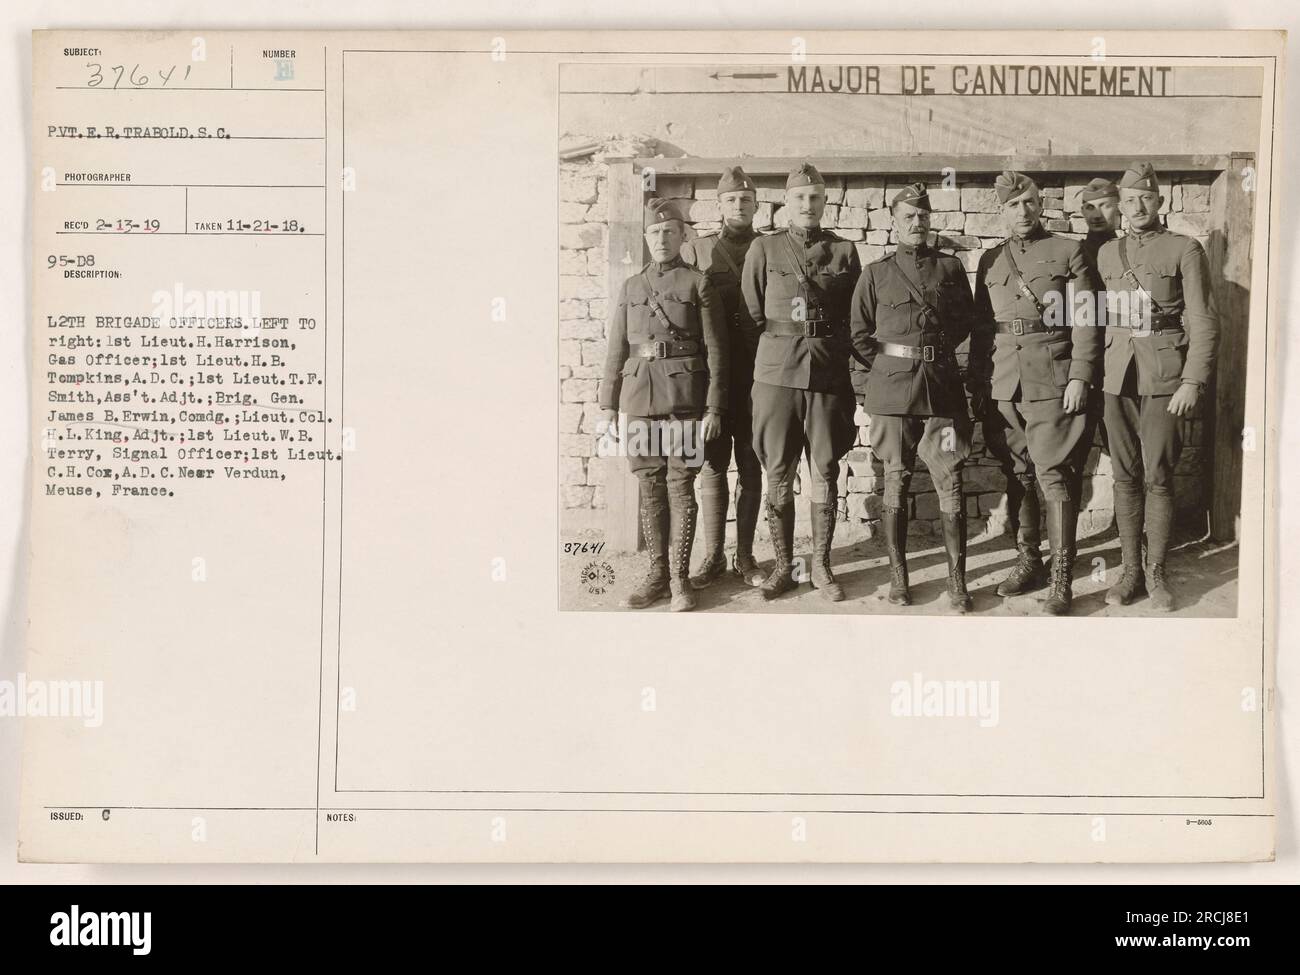 'Officers of the 12th Brigade, left to right: 1st Lieut. H. Harrison, Gas Officer; 1st Lieut. H. B. Tompkins, A. D. C.; 1st Lieut. T. F. Smith, Ass't. Adjt.; Brig. Gen. James B. Erwin, Comdg.; Lieut. Col. H.L.King, Adjt.; 1st Lieut. W. B. Terry, Signal officer; 1st Lieut. C.H. Cox, A. D. C. Neer Verdun, Meuse, France. Taken on November 21, 1918, by P.Vt.E. R.Trabold, official photographer for the U.S. Signal Corps during World War I.' Stock Photo